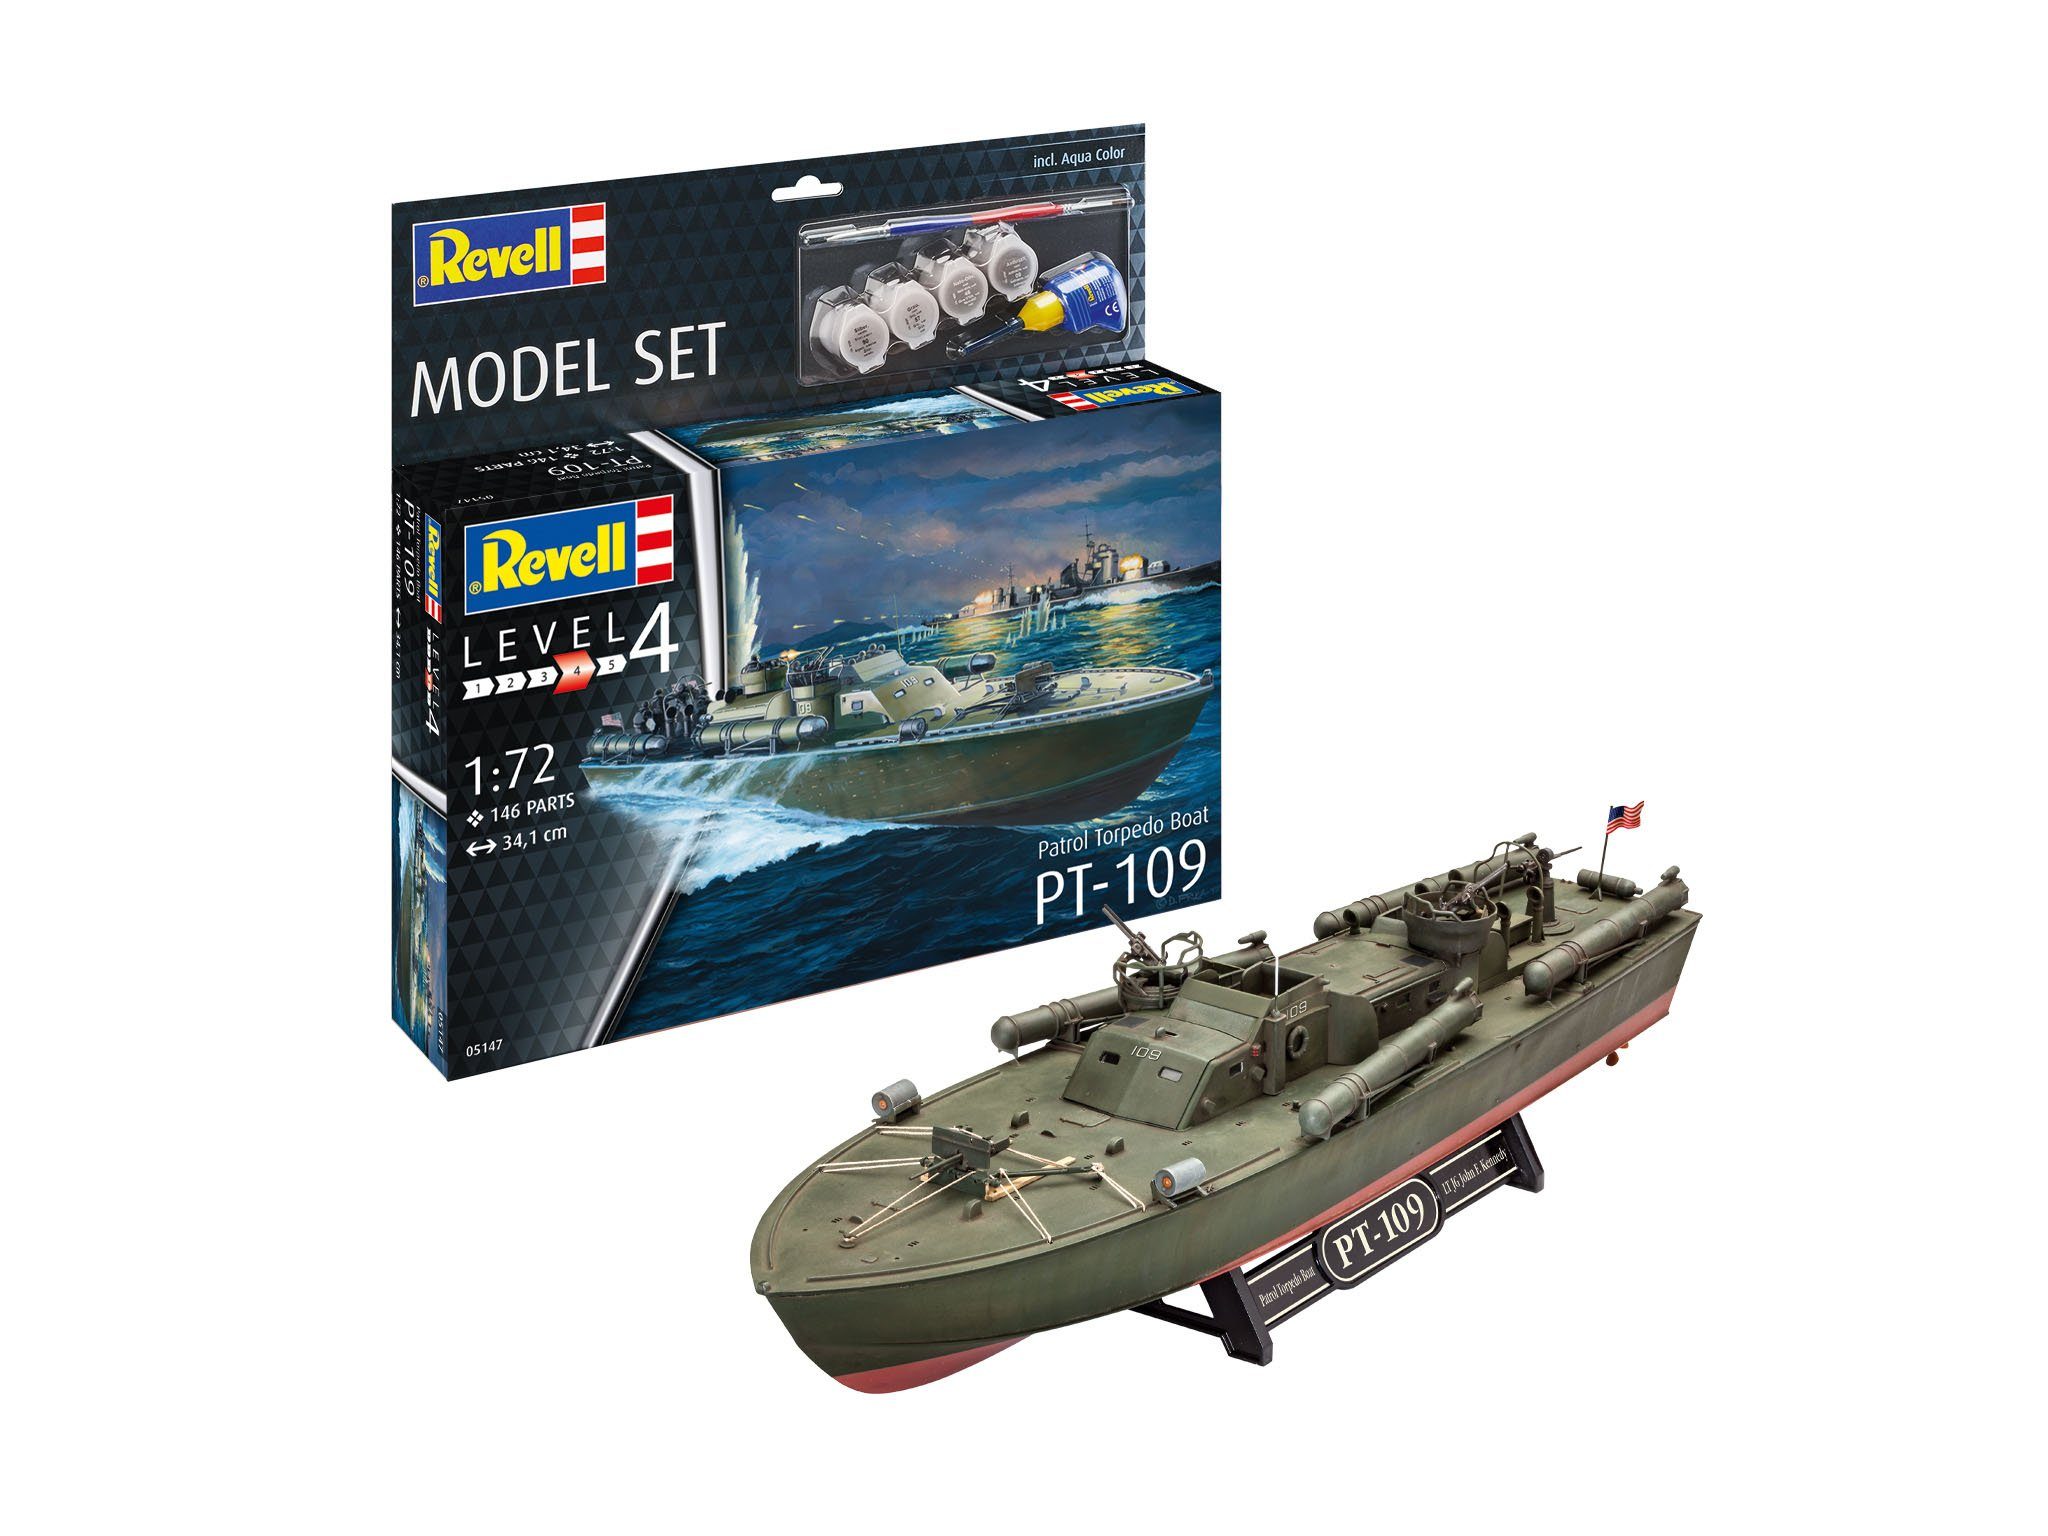 Revell® Modellbausatz Revell 65147 Bausatz Patrol Torpedo Boat PT-109 1: